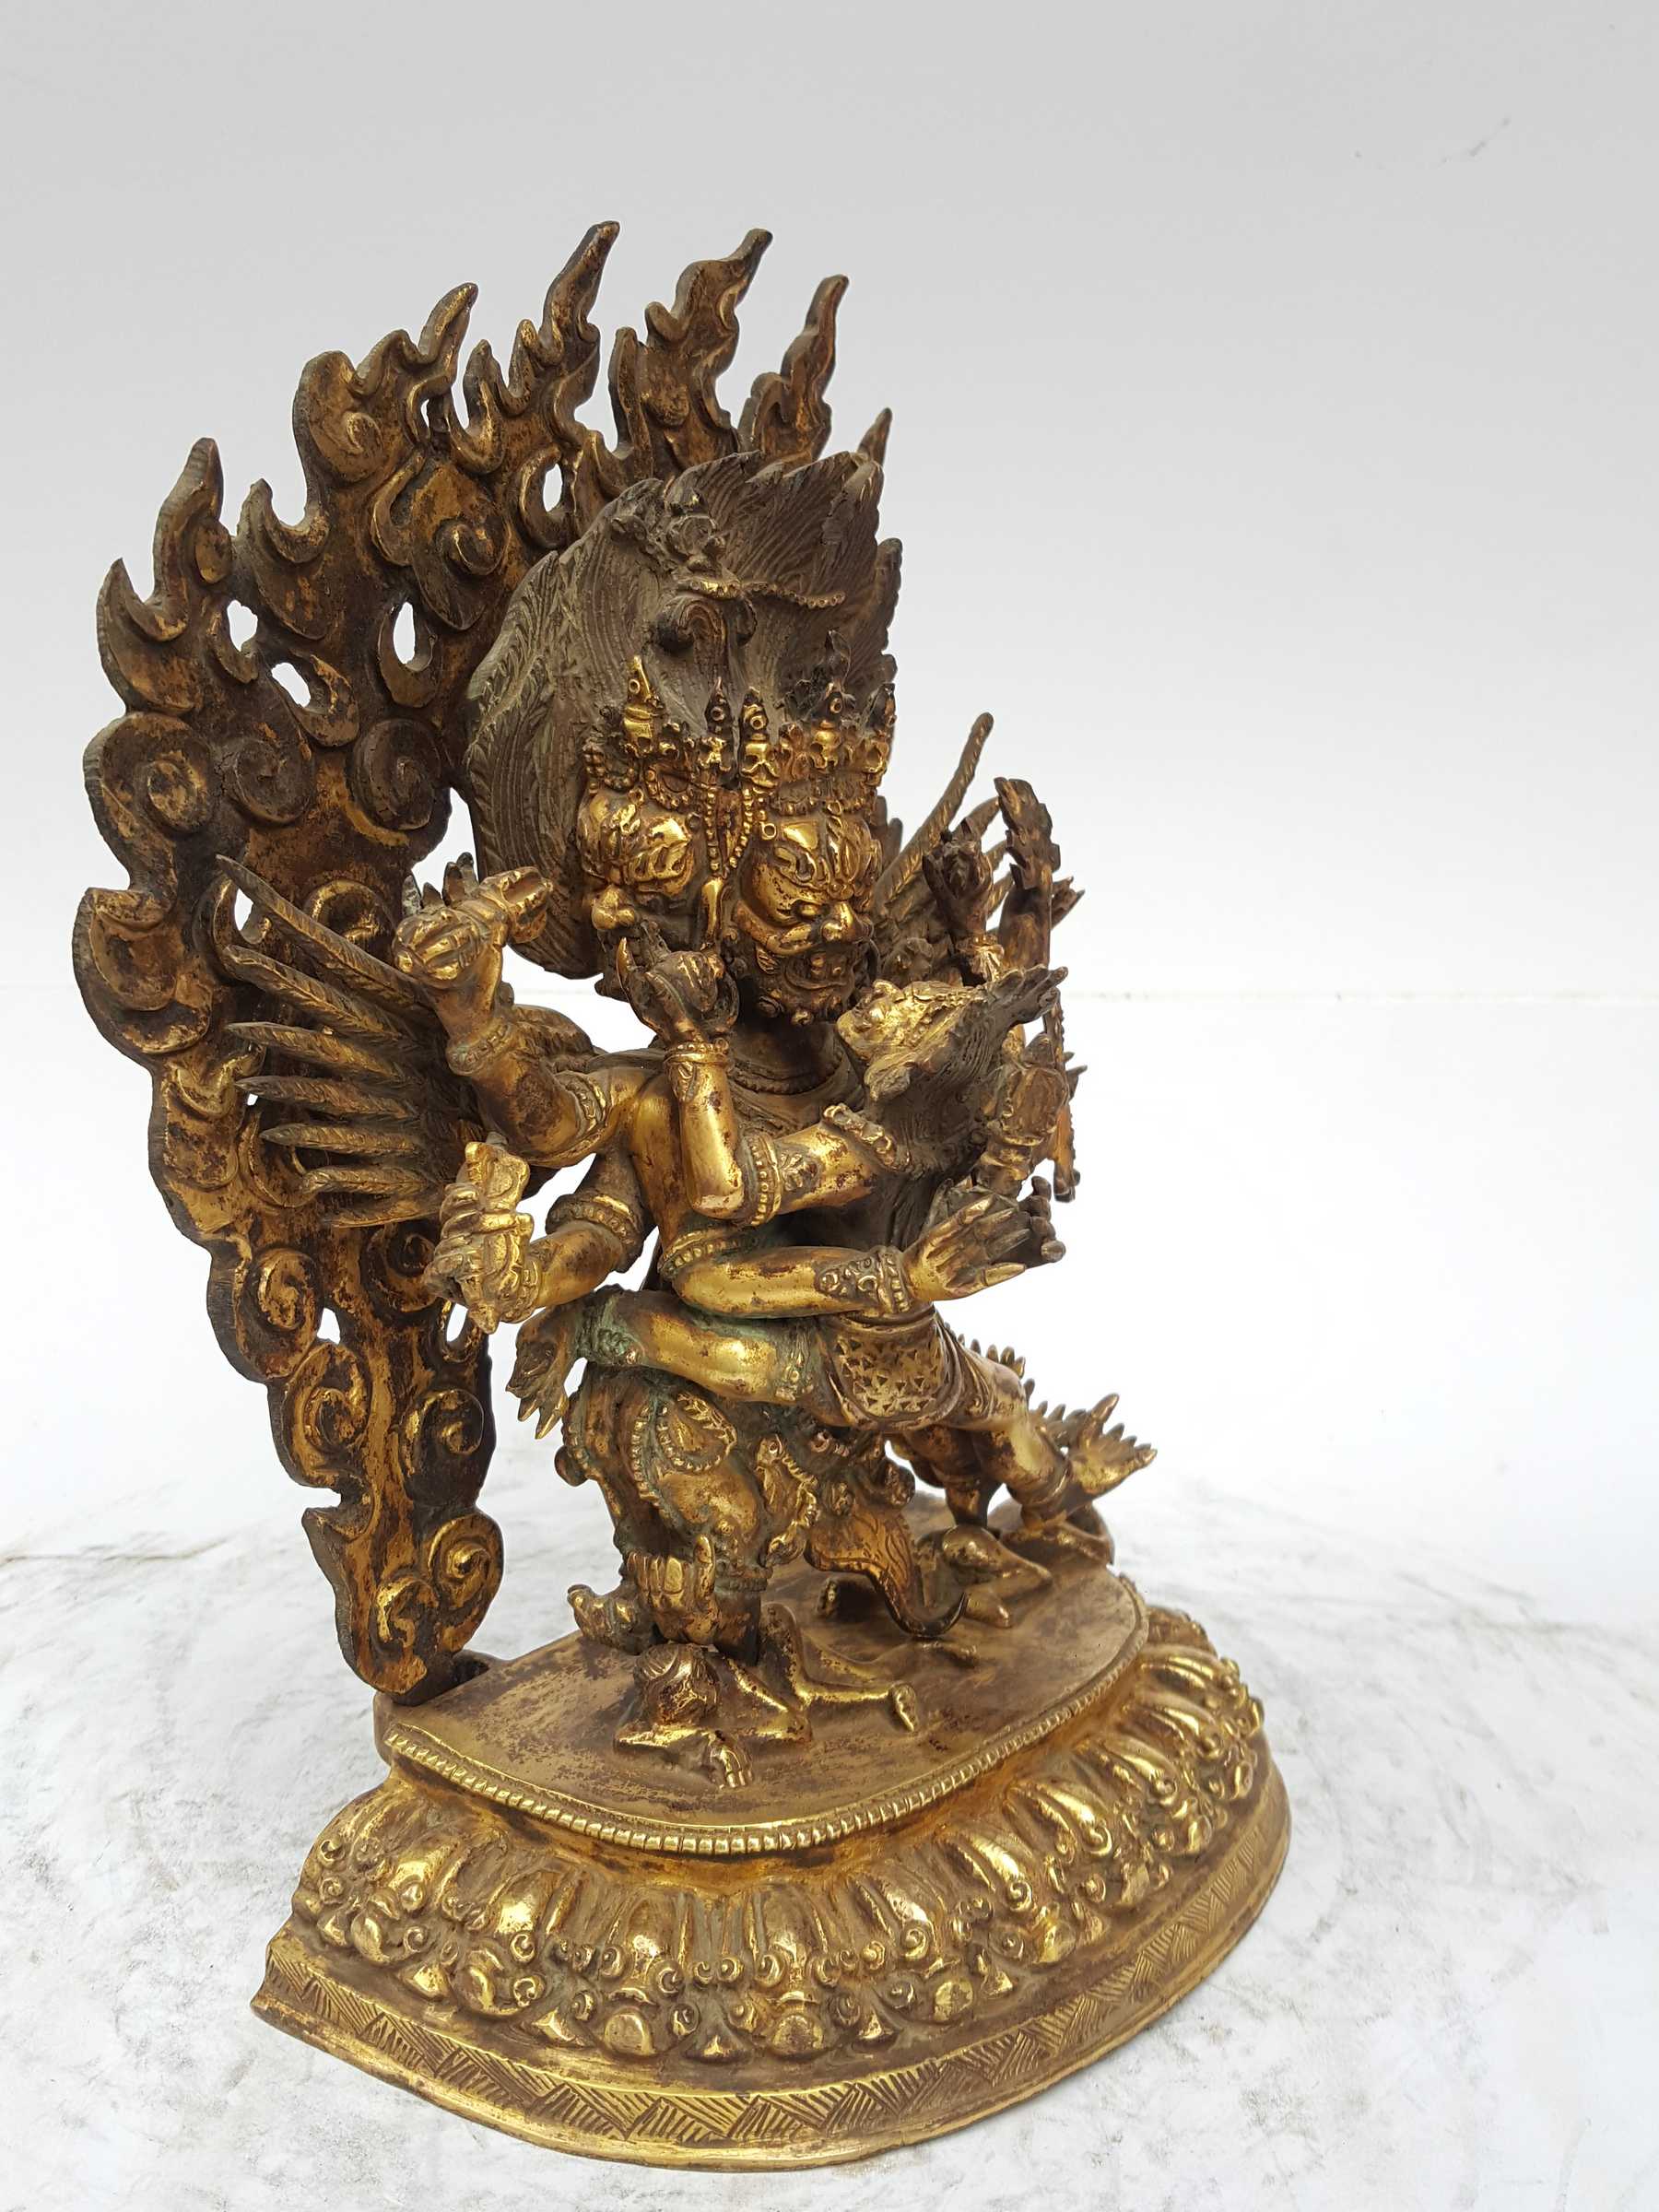 Statue Of Vajrakilaya - Dorje Phurba - Heruka With Consort, shakti, Yab-yum full Fire Gold Plated, And antique Finishing